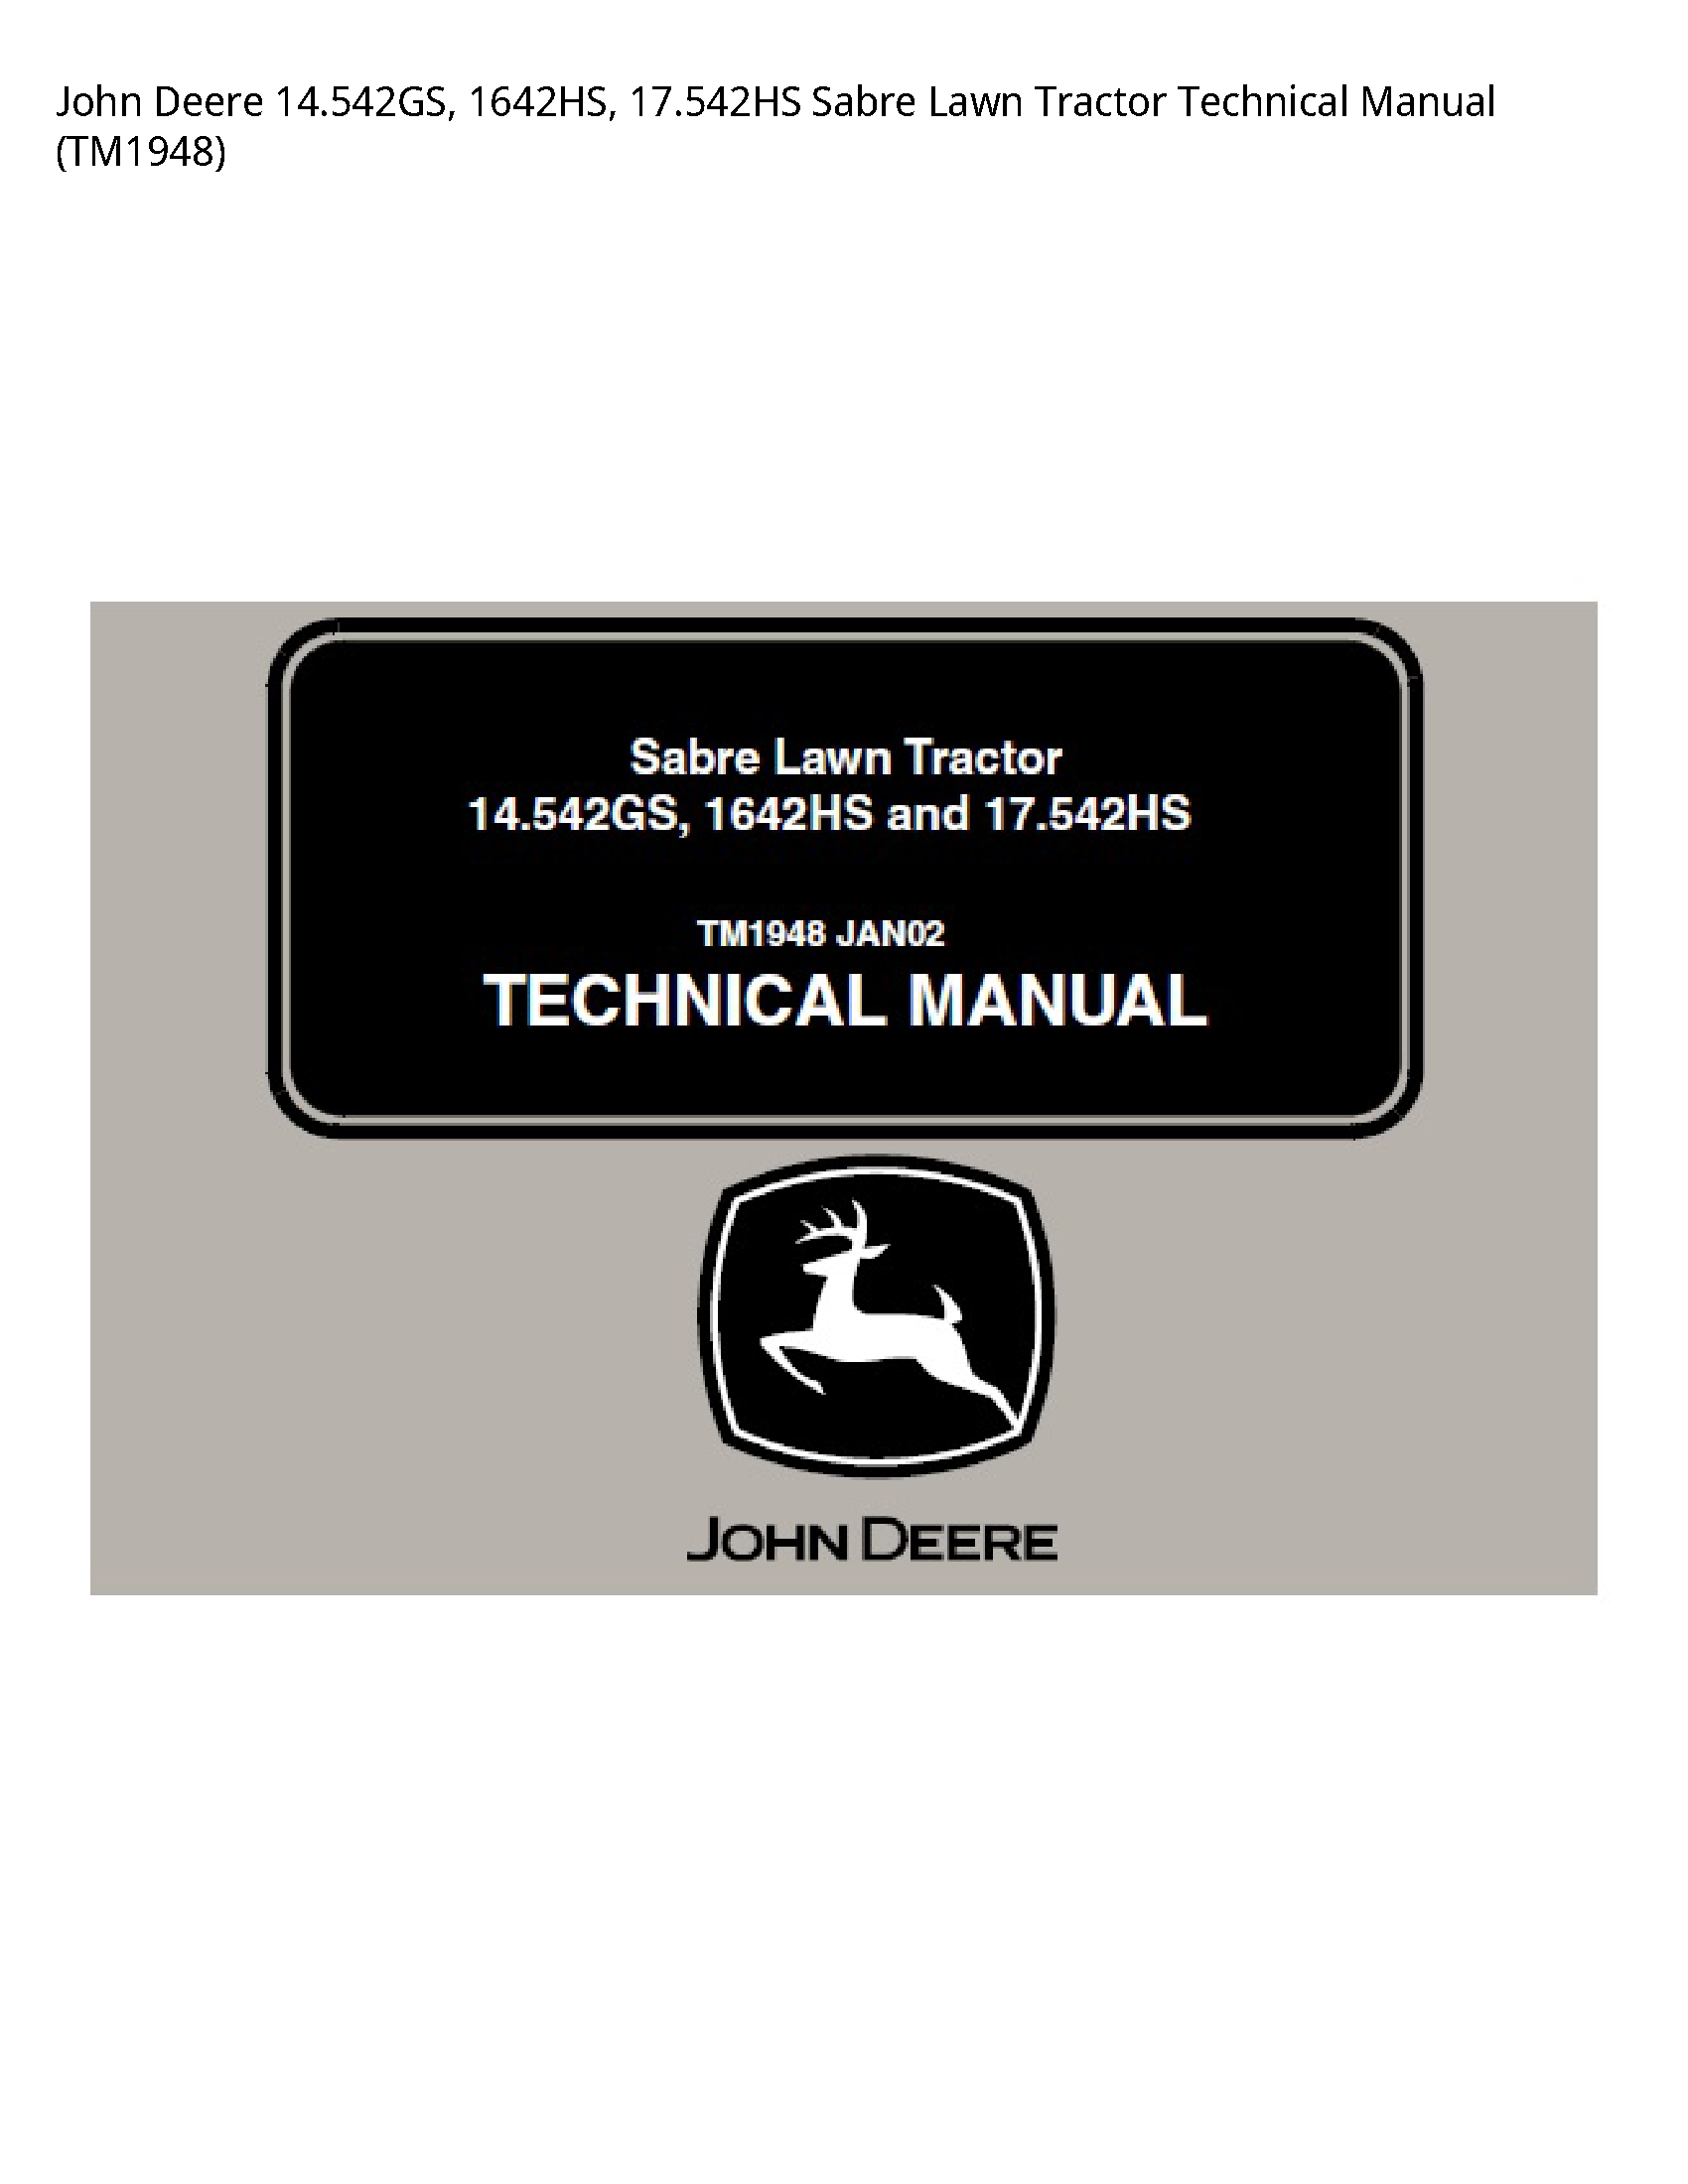 John Deere 14.542GS Sabre Lawn Tractor Technical manual